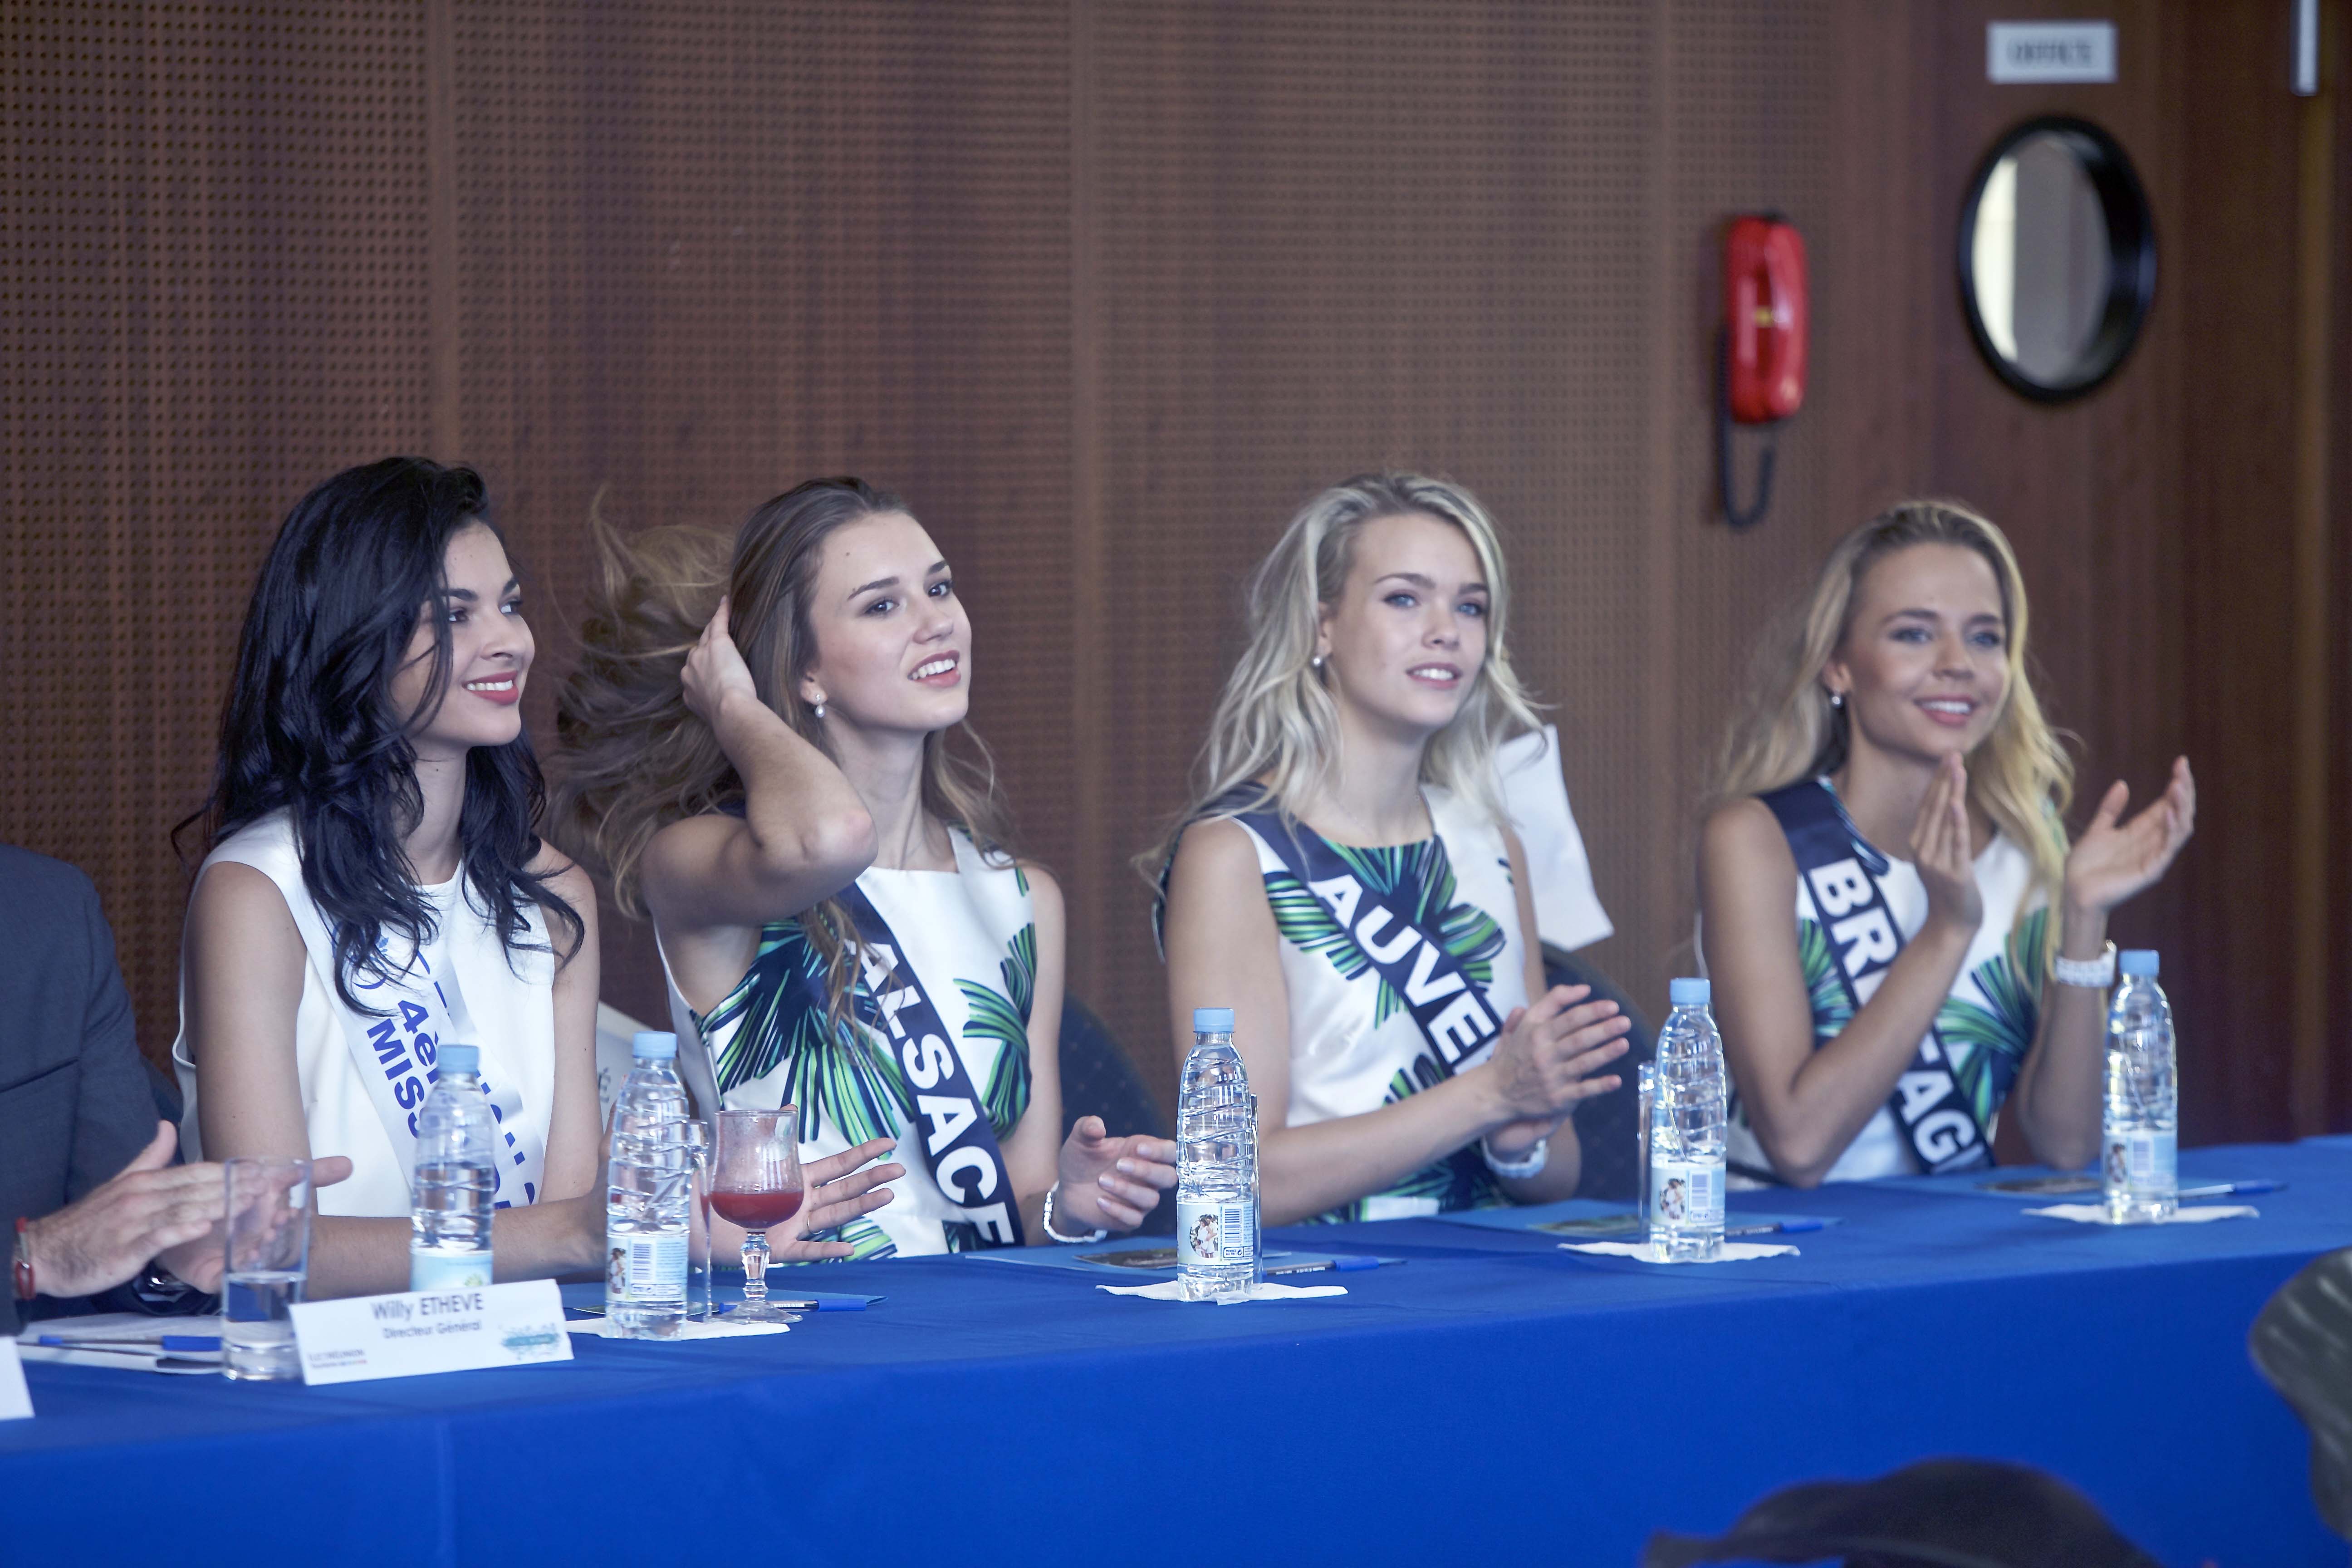 Les candidates Miss France 2017 au MOCA